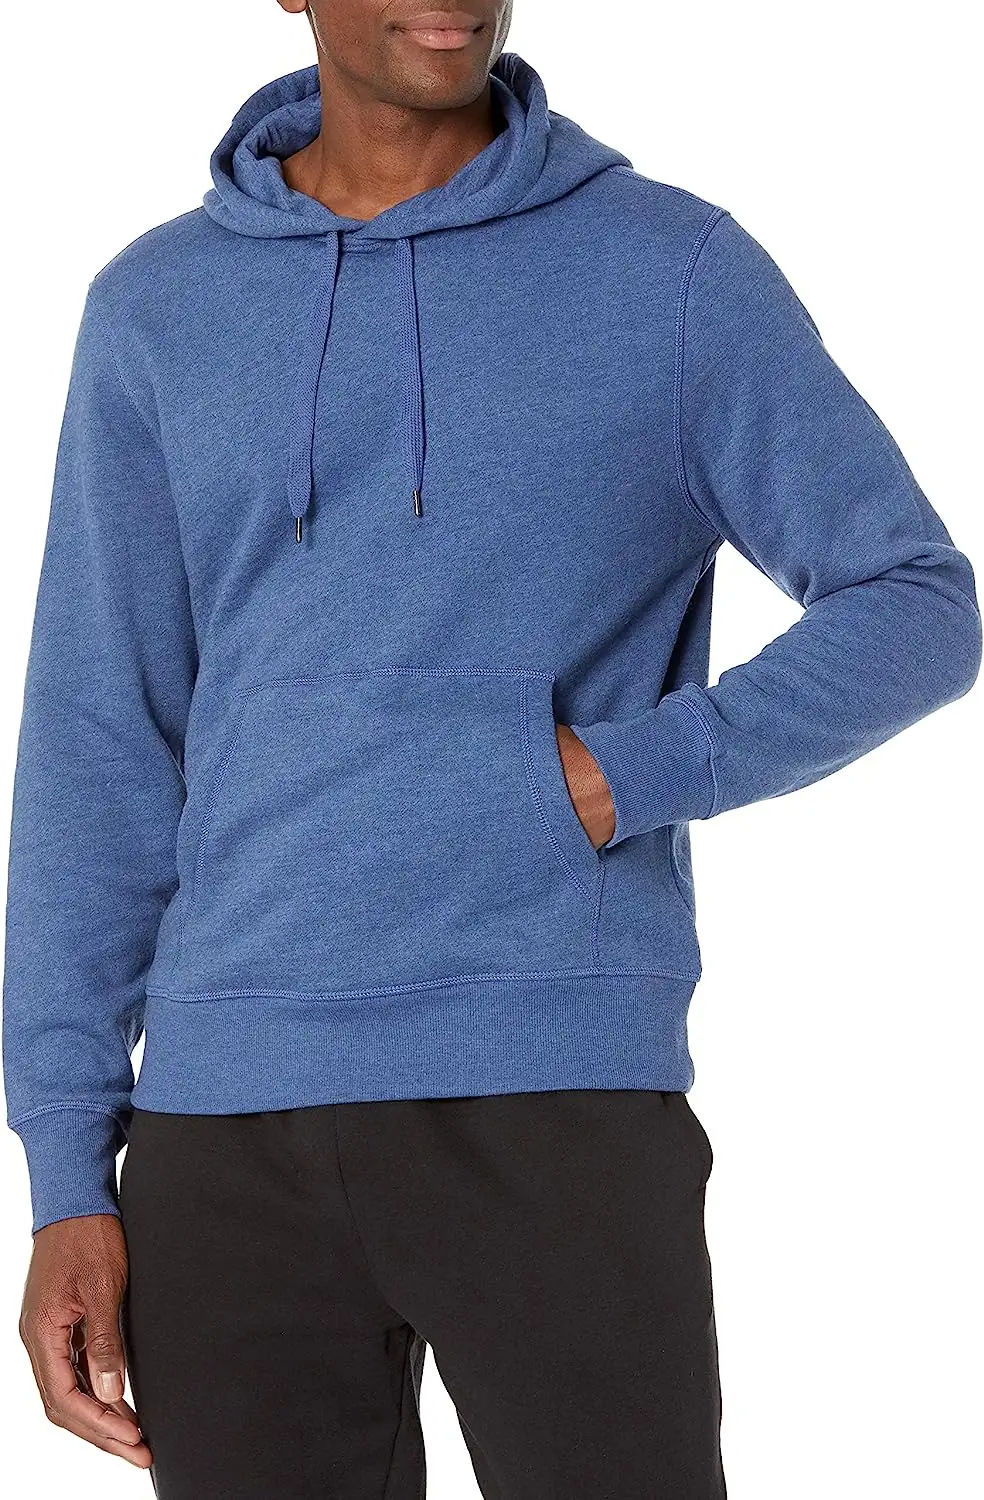 Custom Hoodie factory screen print hoodies high quality oversize street fashion hoodies for men